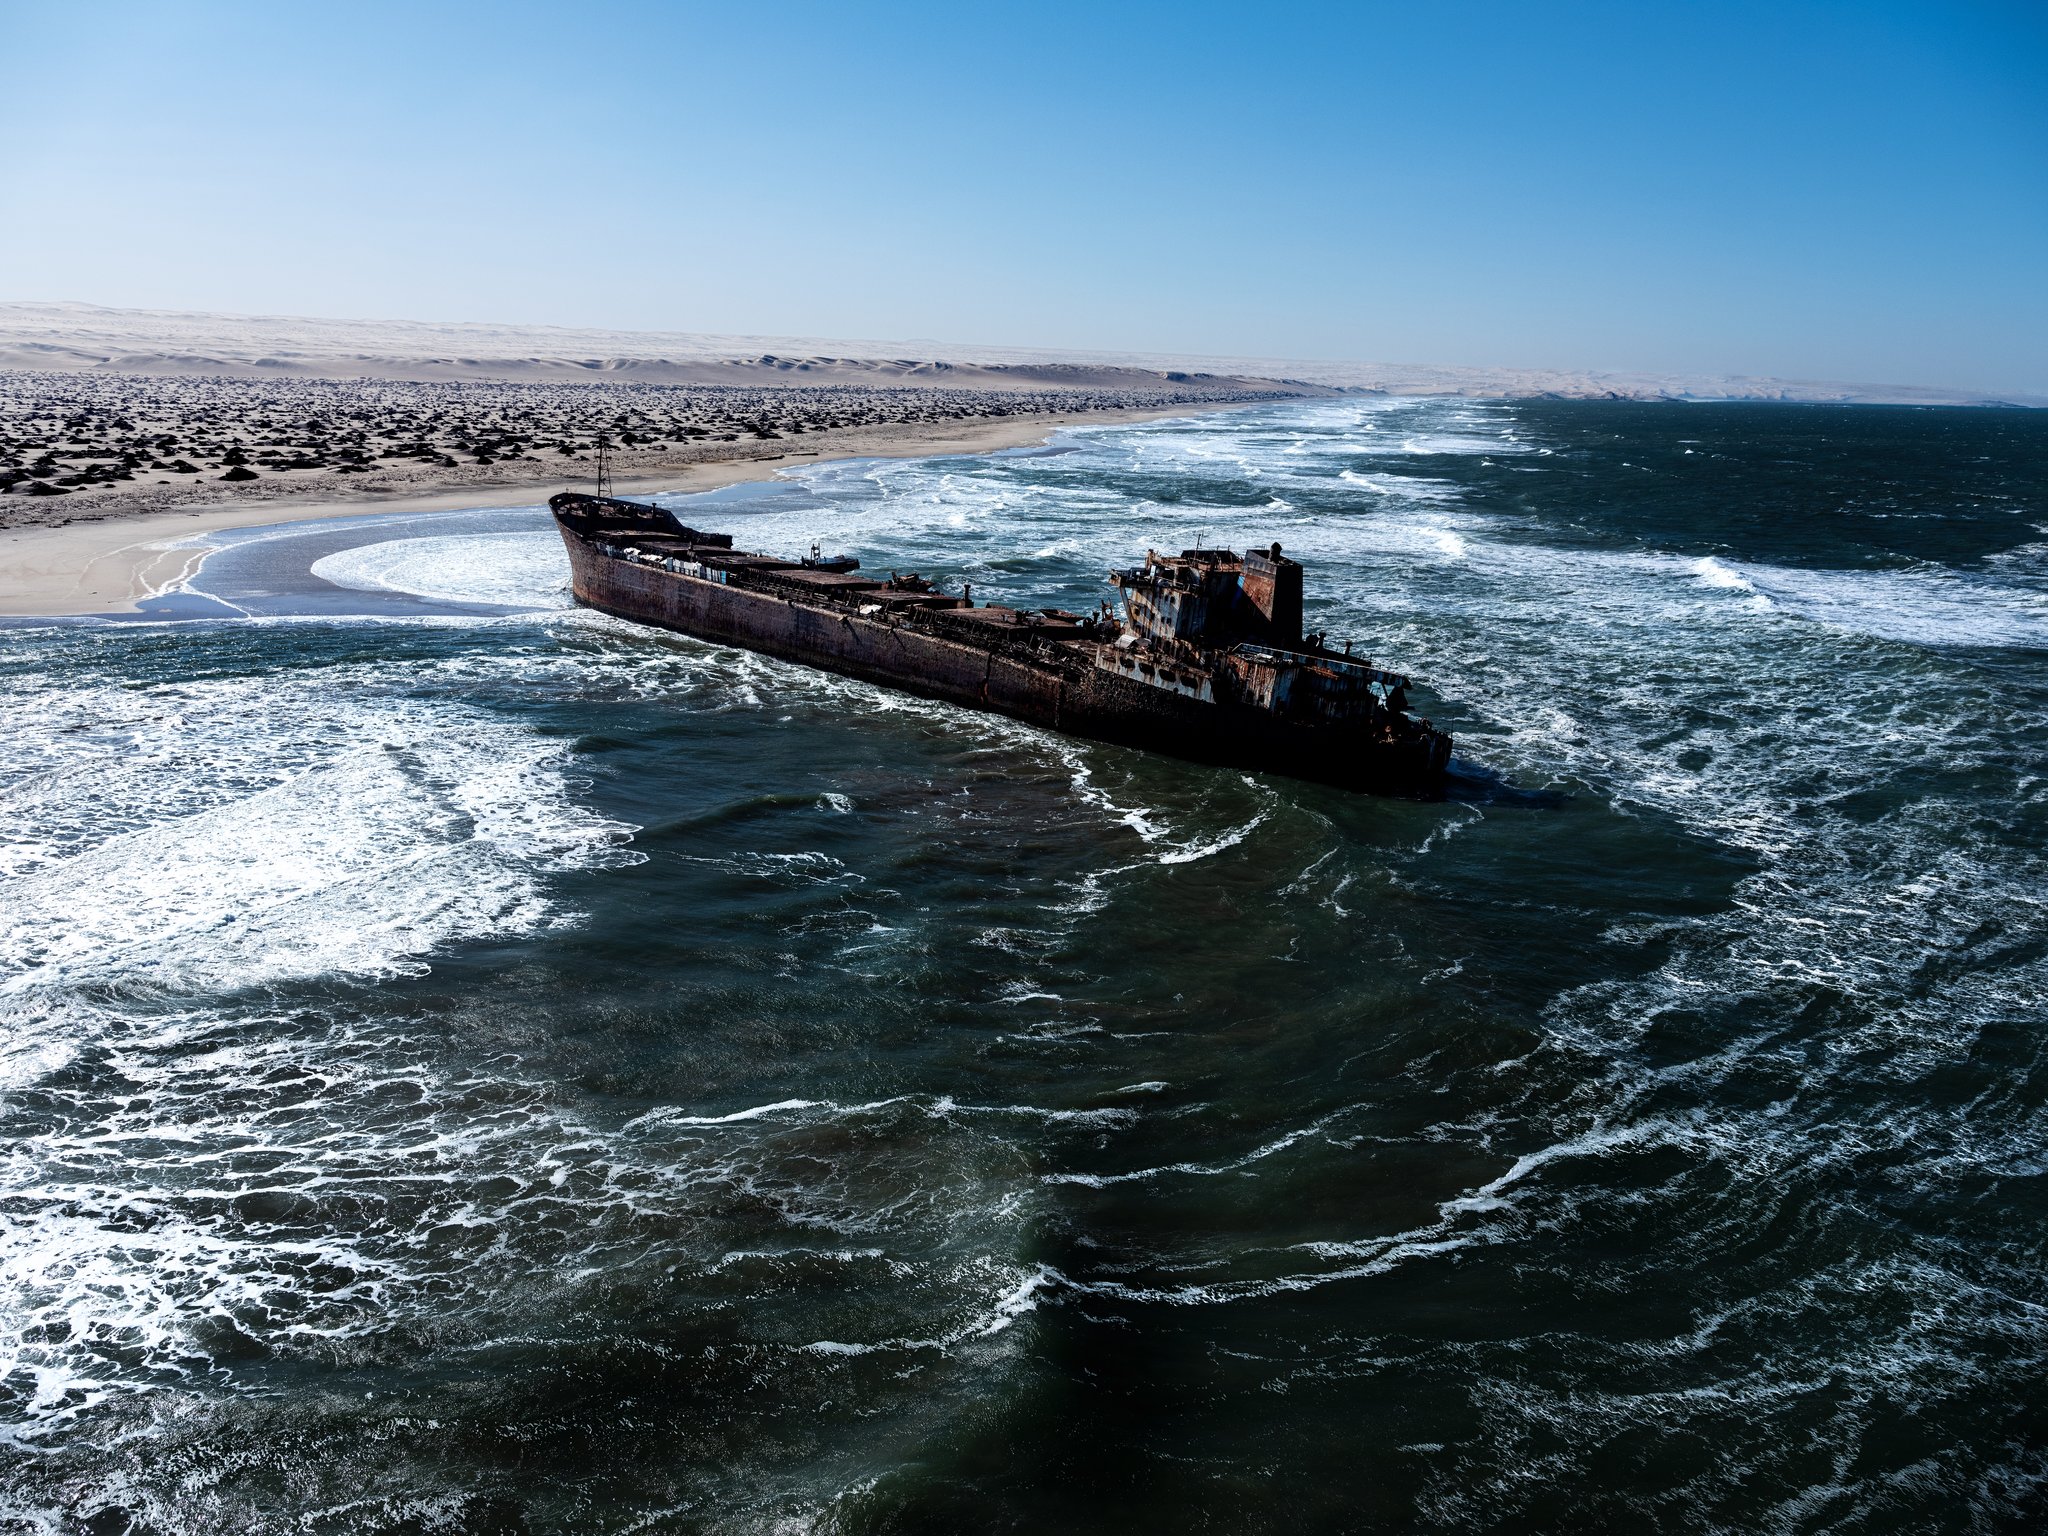 Frotamerica shipwreck, Atlantic West Coast, Namibia